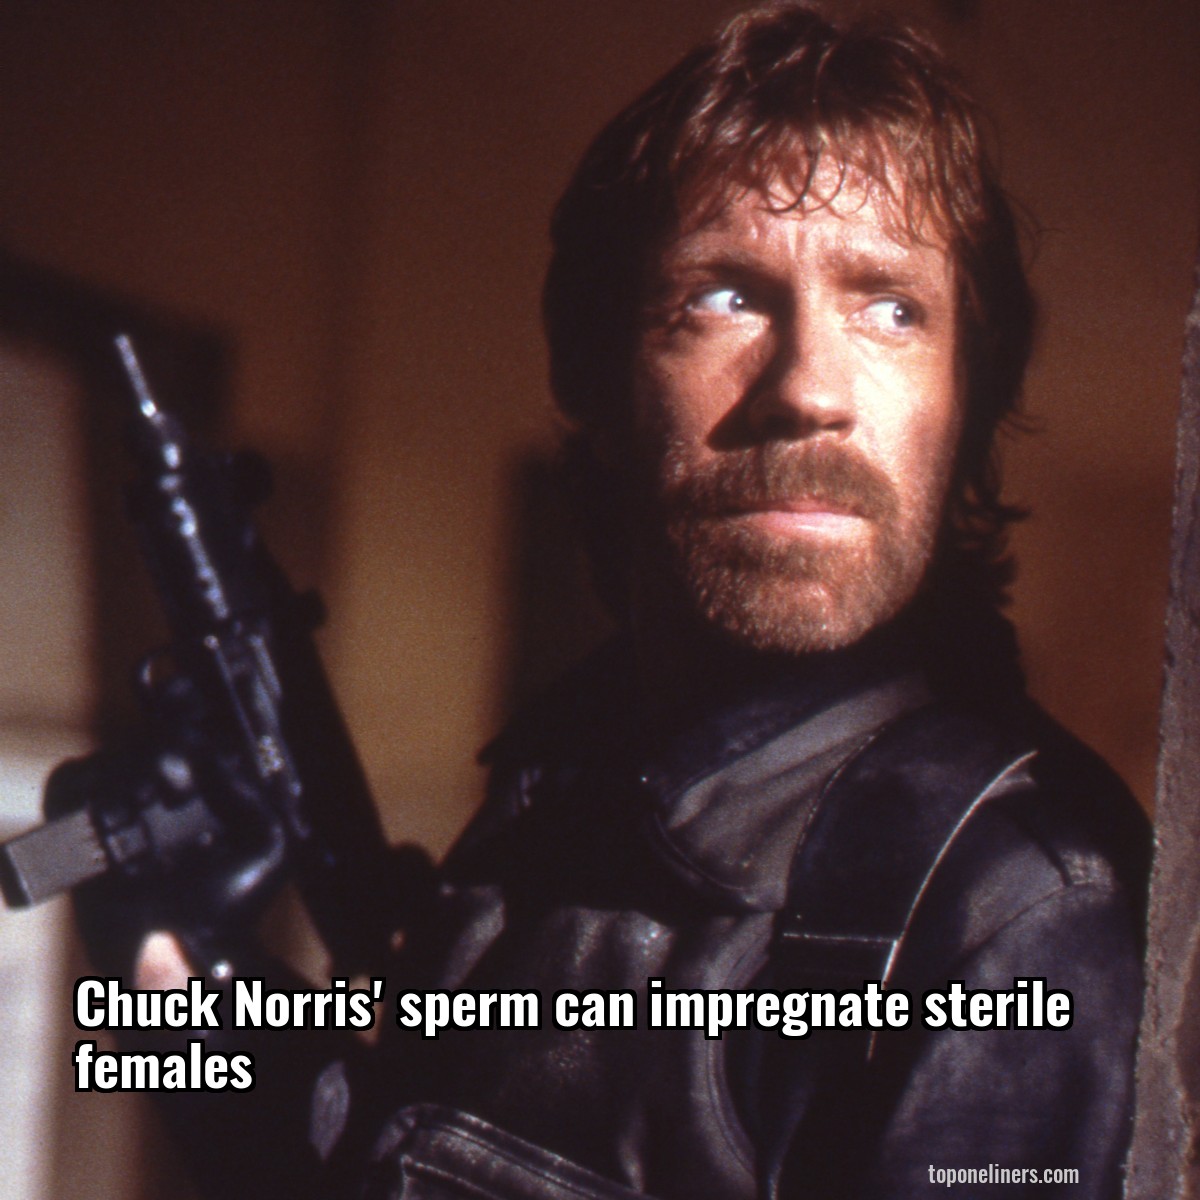 Chuck Norris' sperm can impregnate sterile females